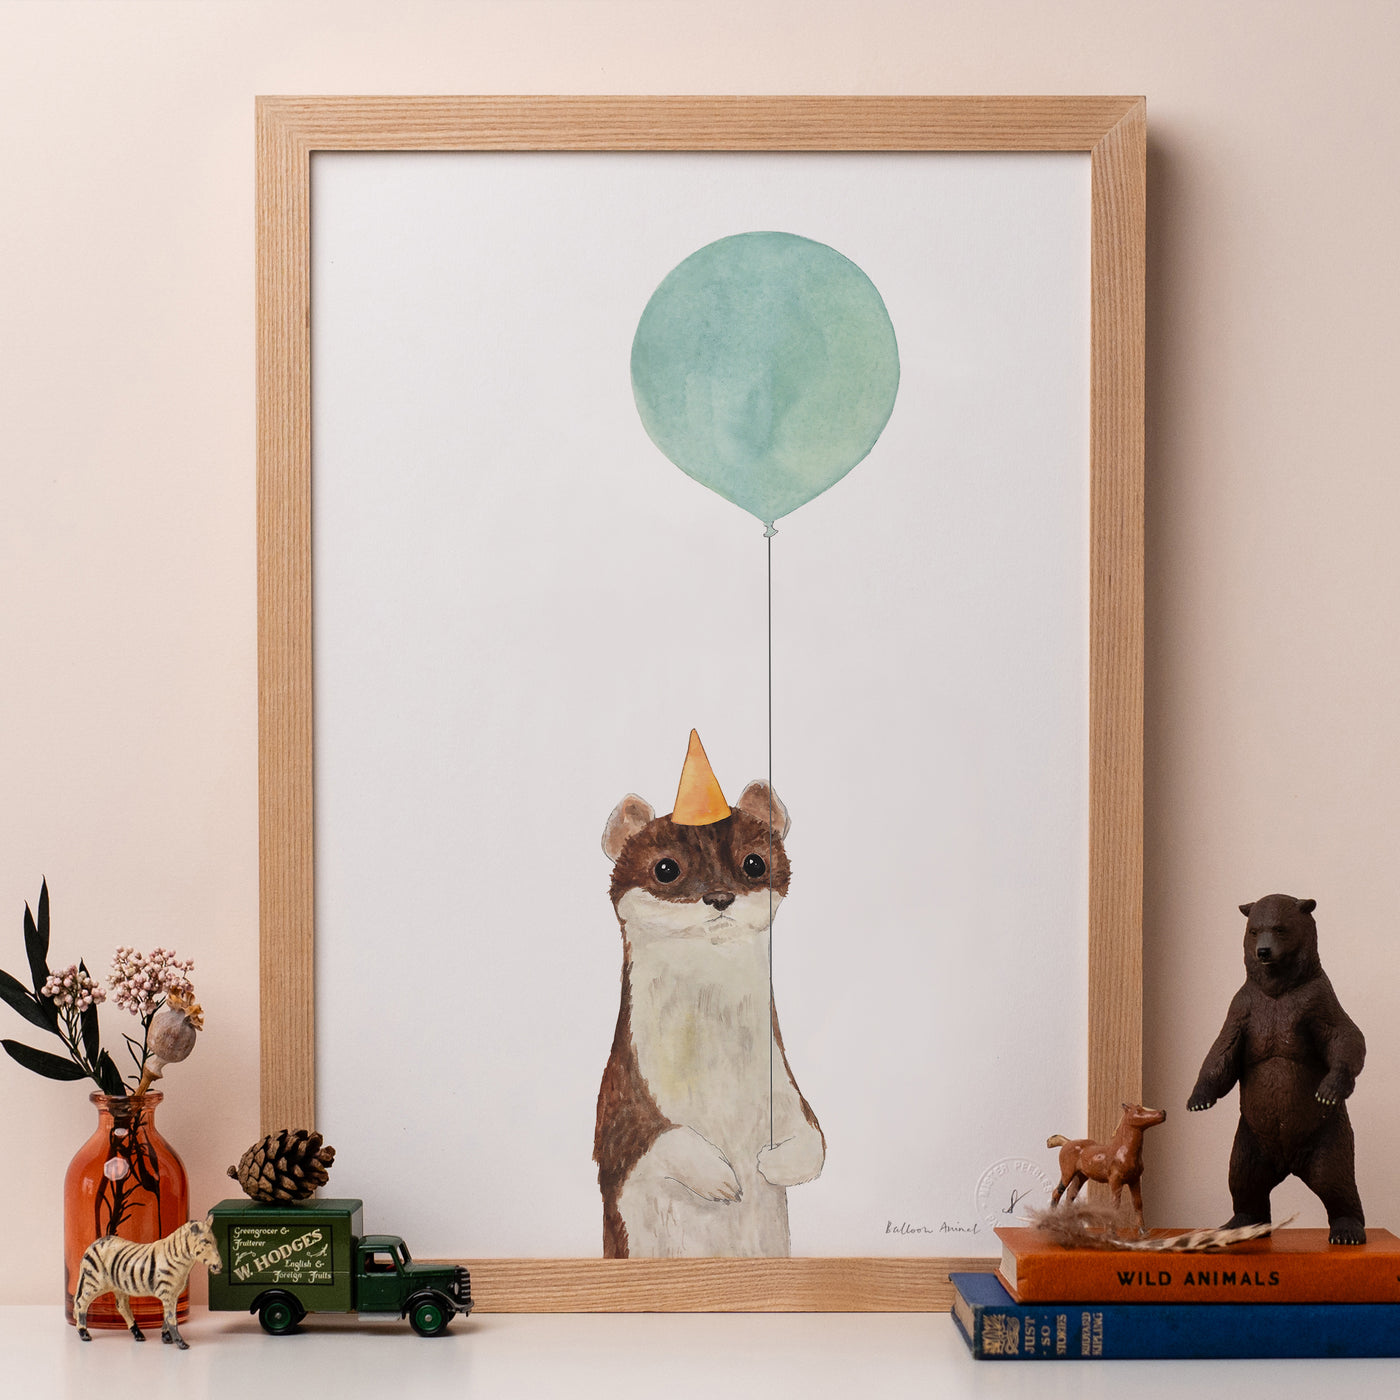 Balloon Animal Print - Weasel